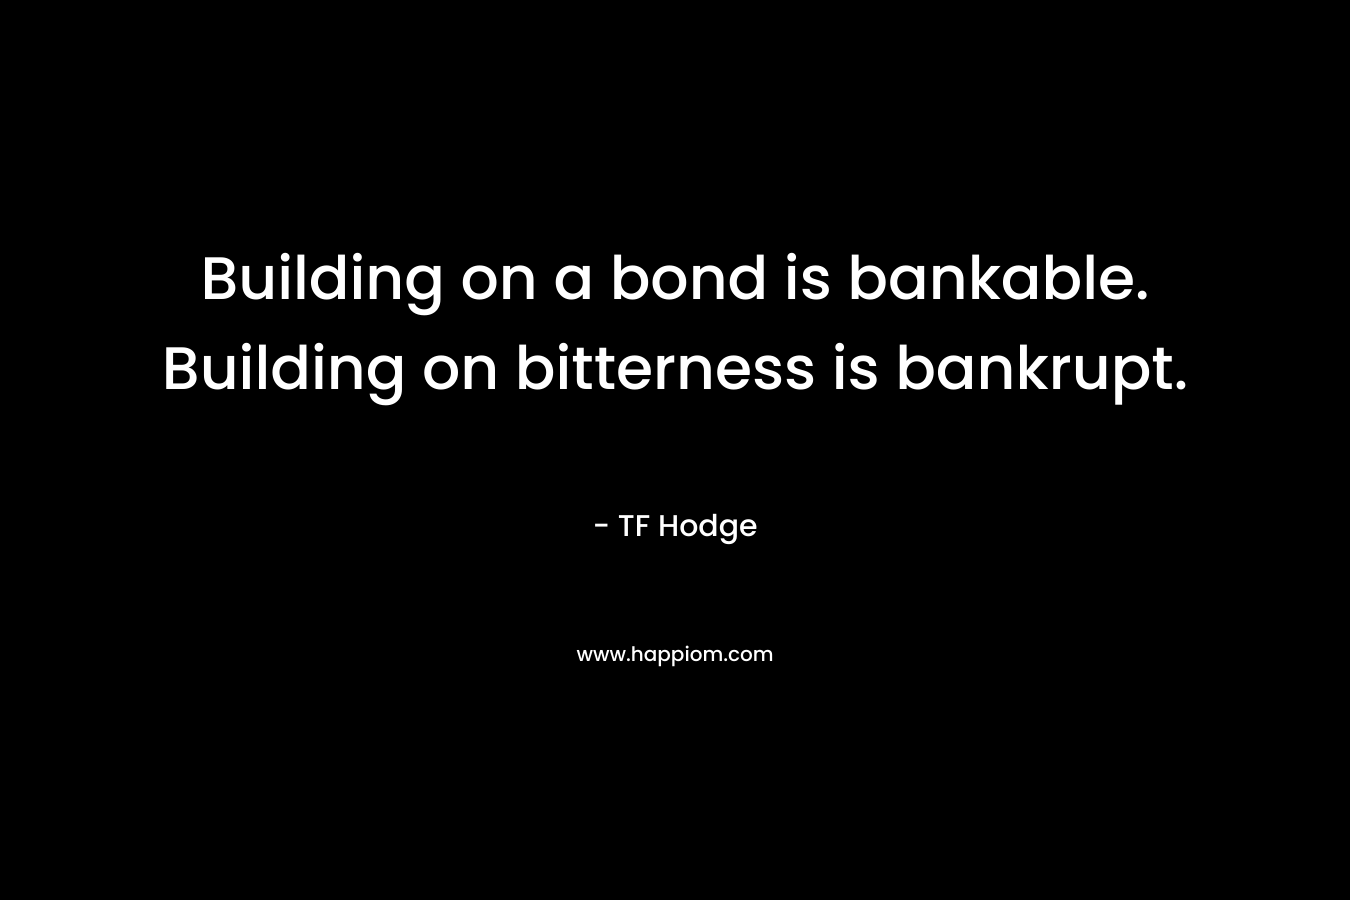 Building on a bond is bankable. Building on bitterness is bankrupt.